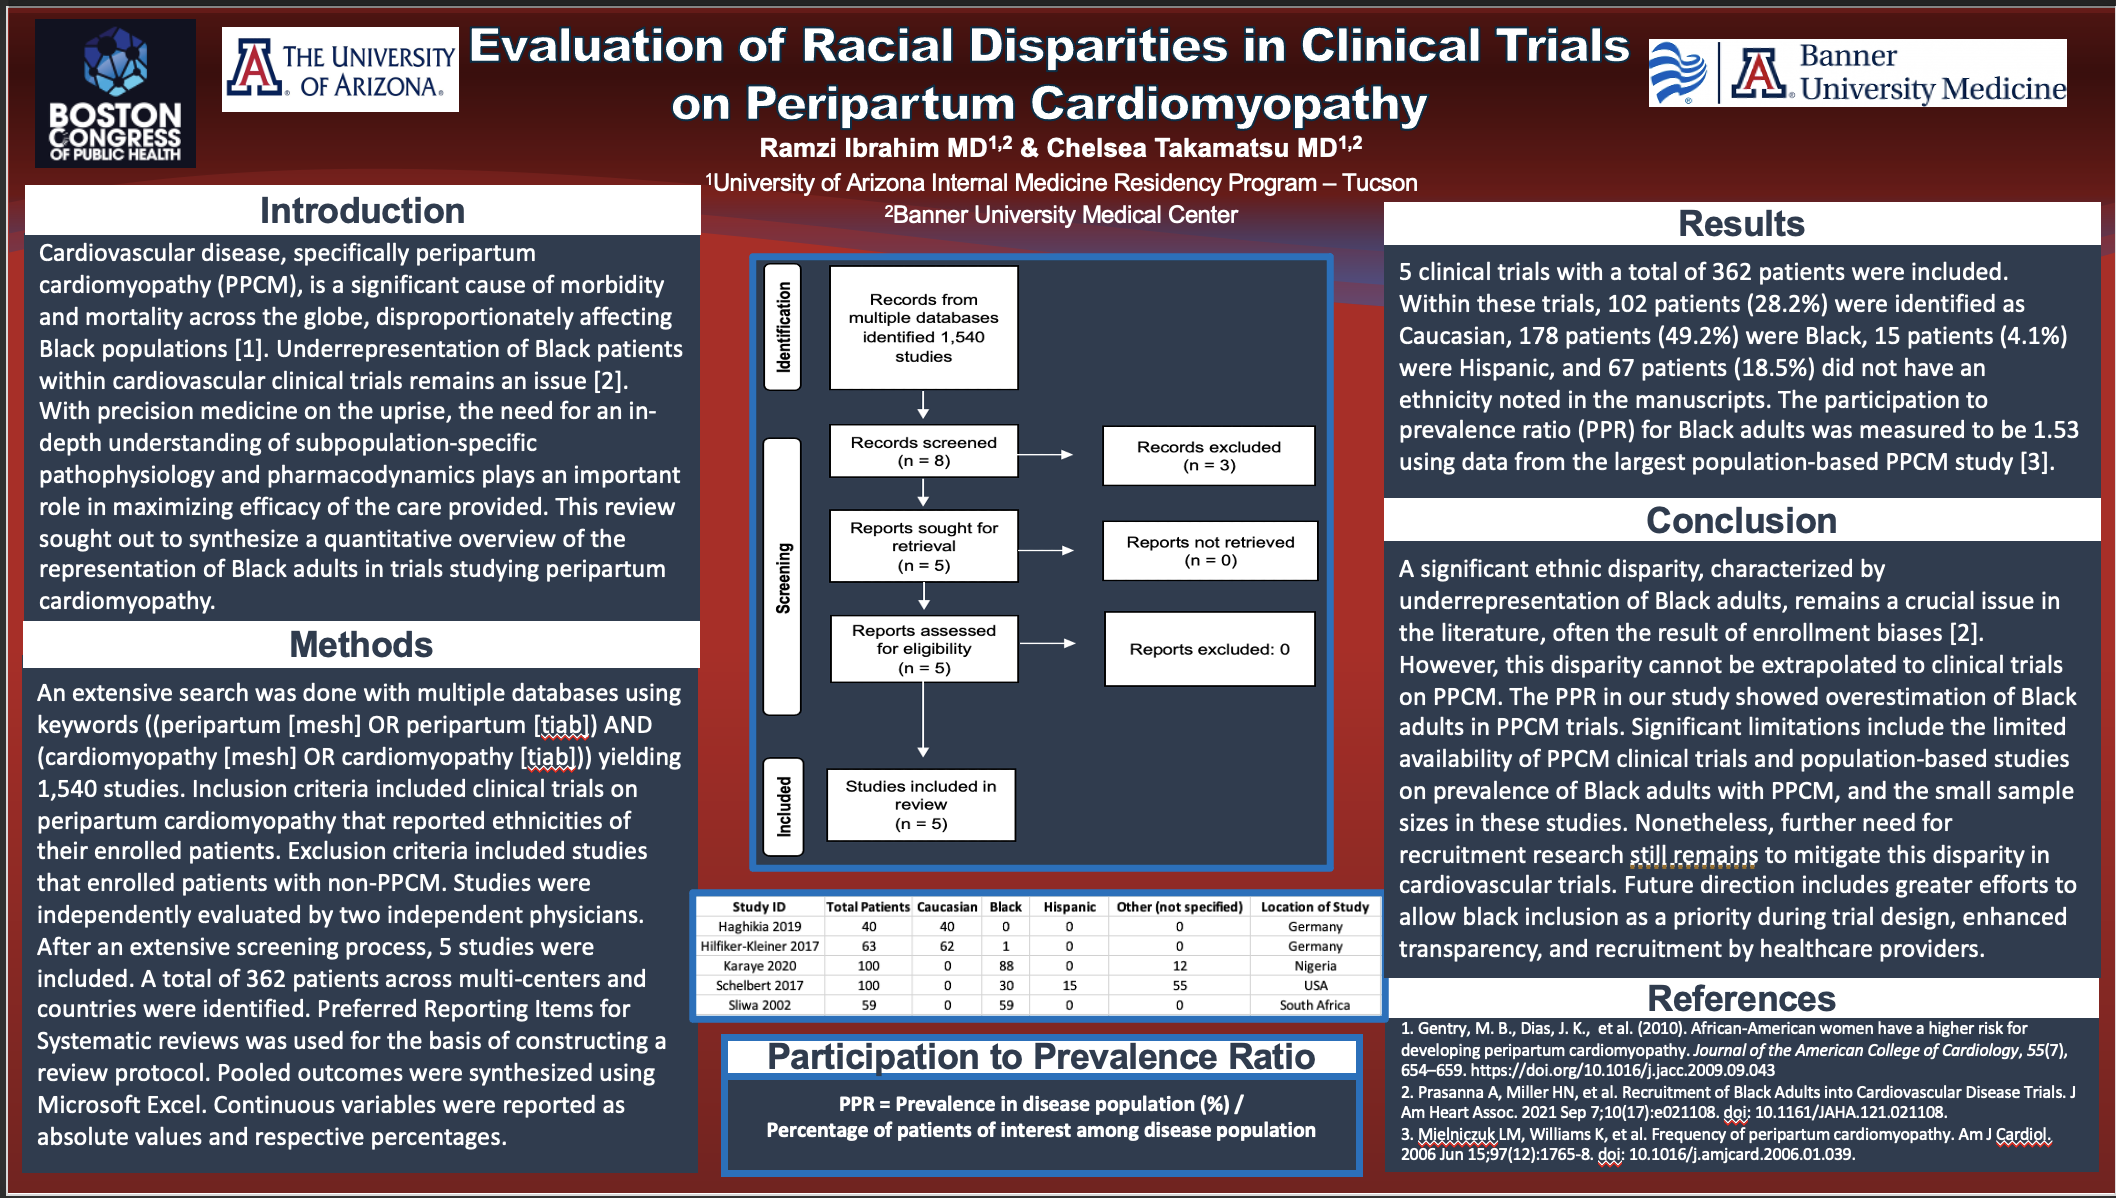 Edition 67 – Evaluation of Racial Disparities in Clinical Trials on Peripartum Cardiomyopathy